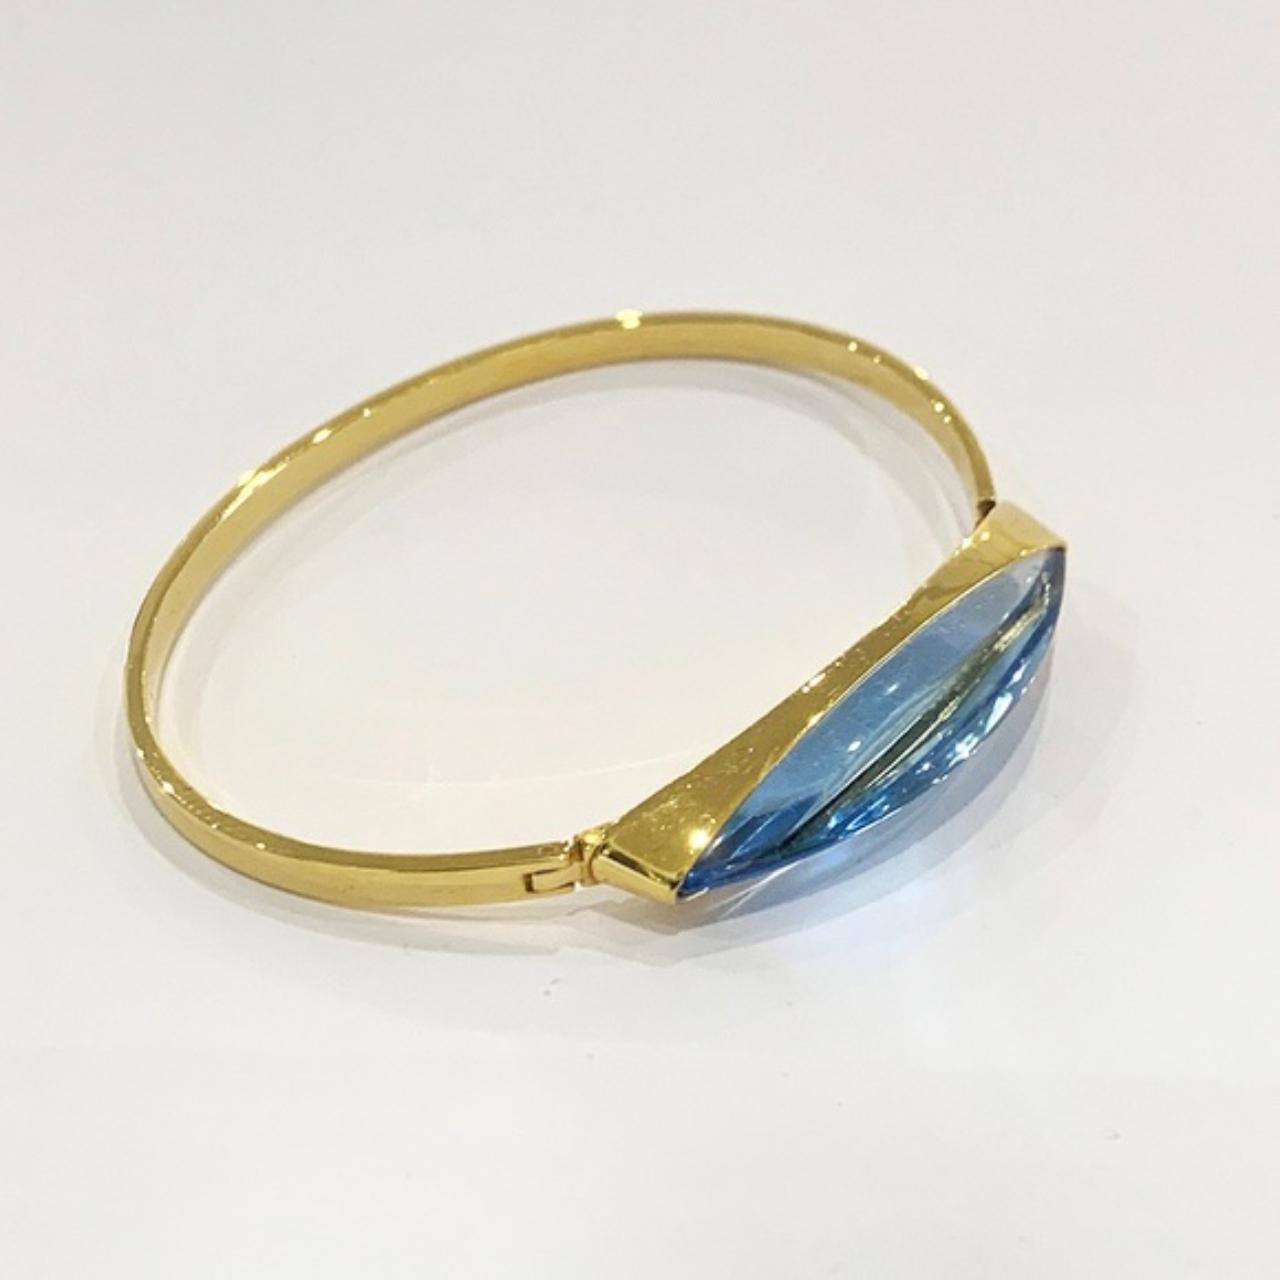 Product Image 1 - Lalique Eclat Crystal Bracelet Bangle

Blue